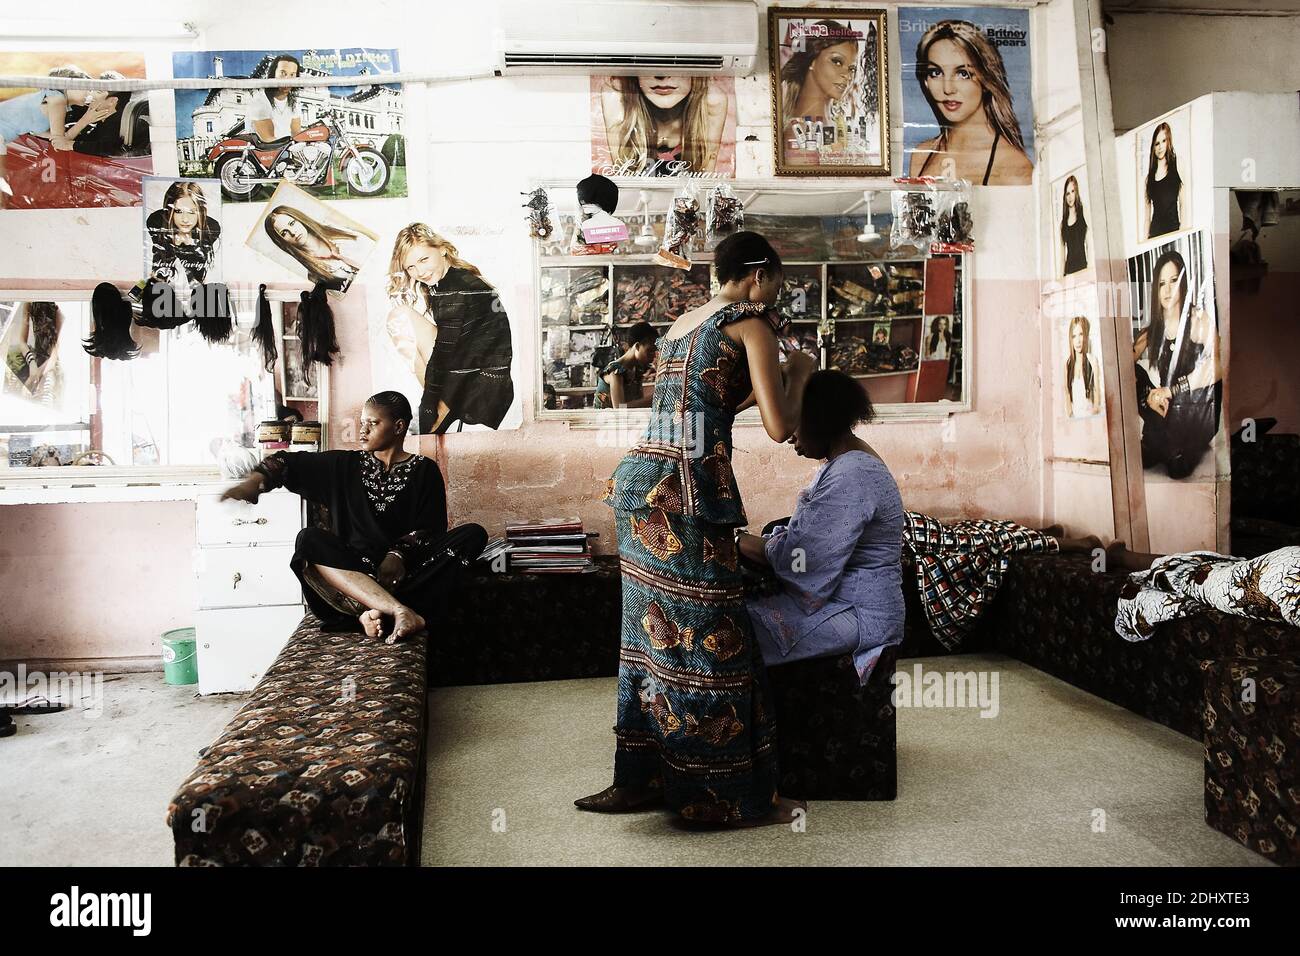 Mali, Bamako. Beauty salon interior with woman Stock Photo